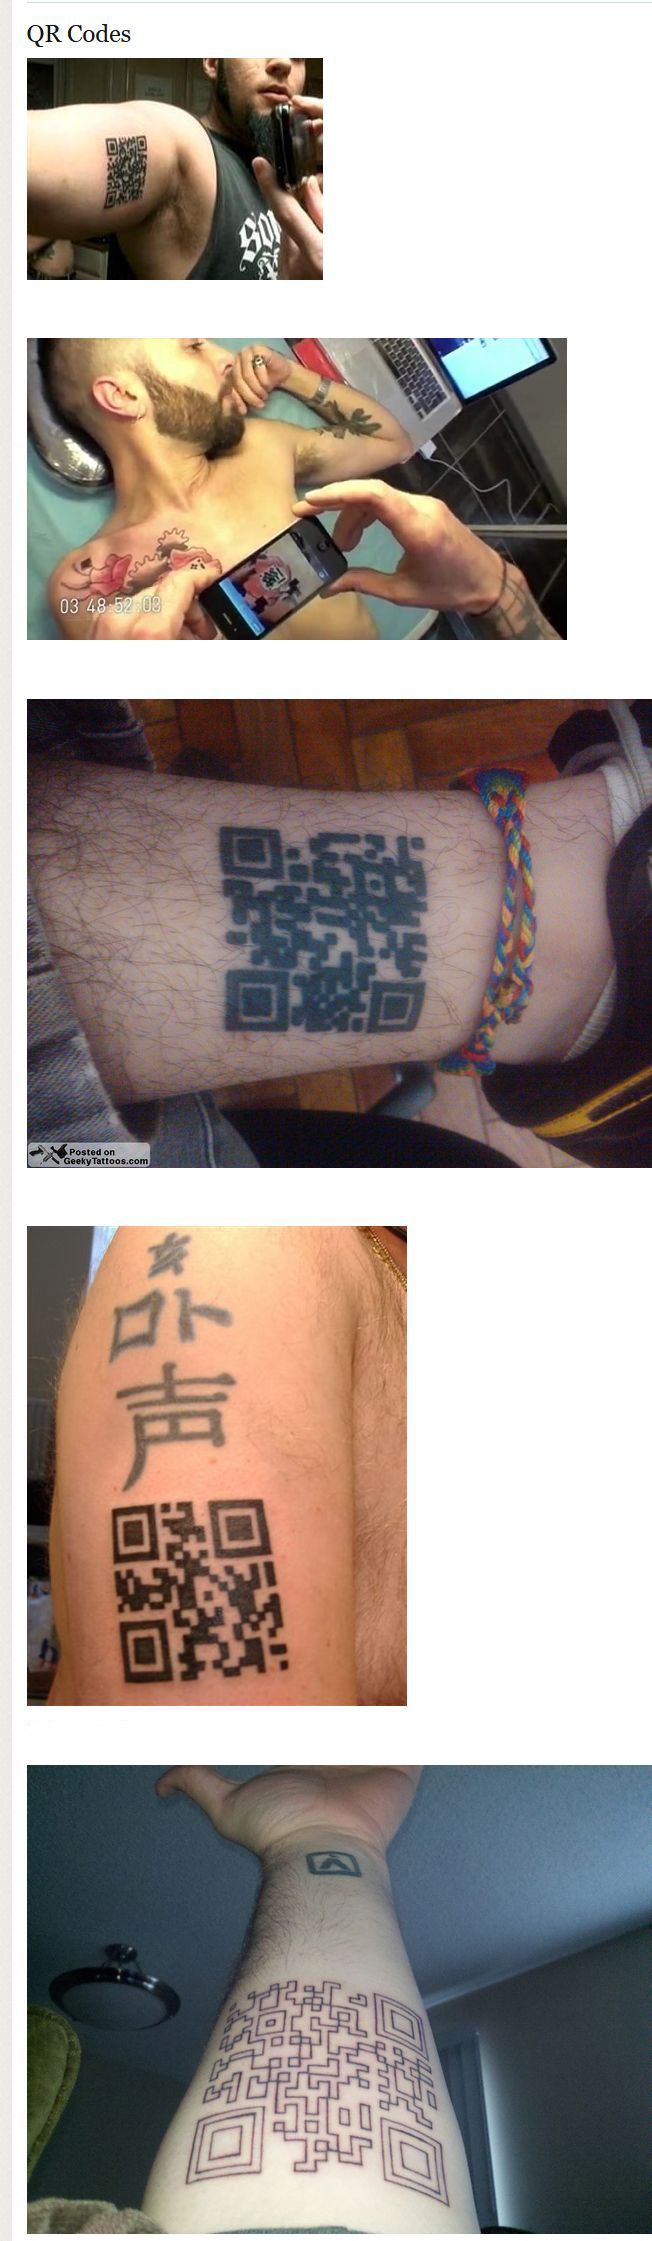 Types of Nerdy Tattoos (8 pics)